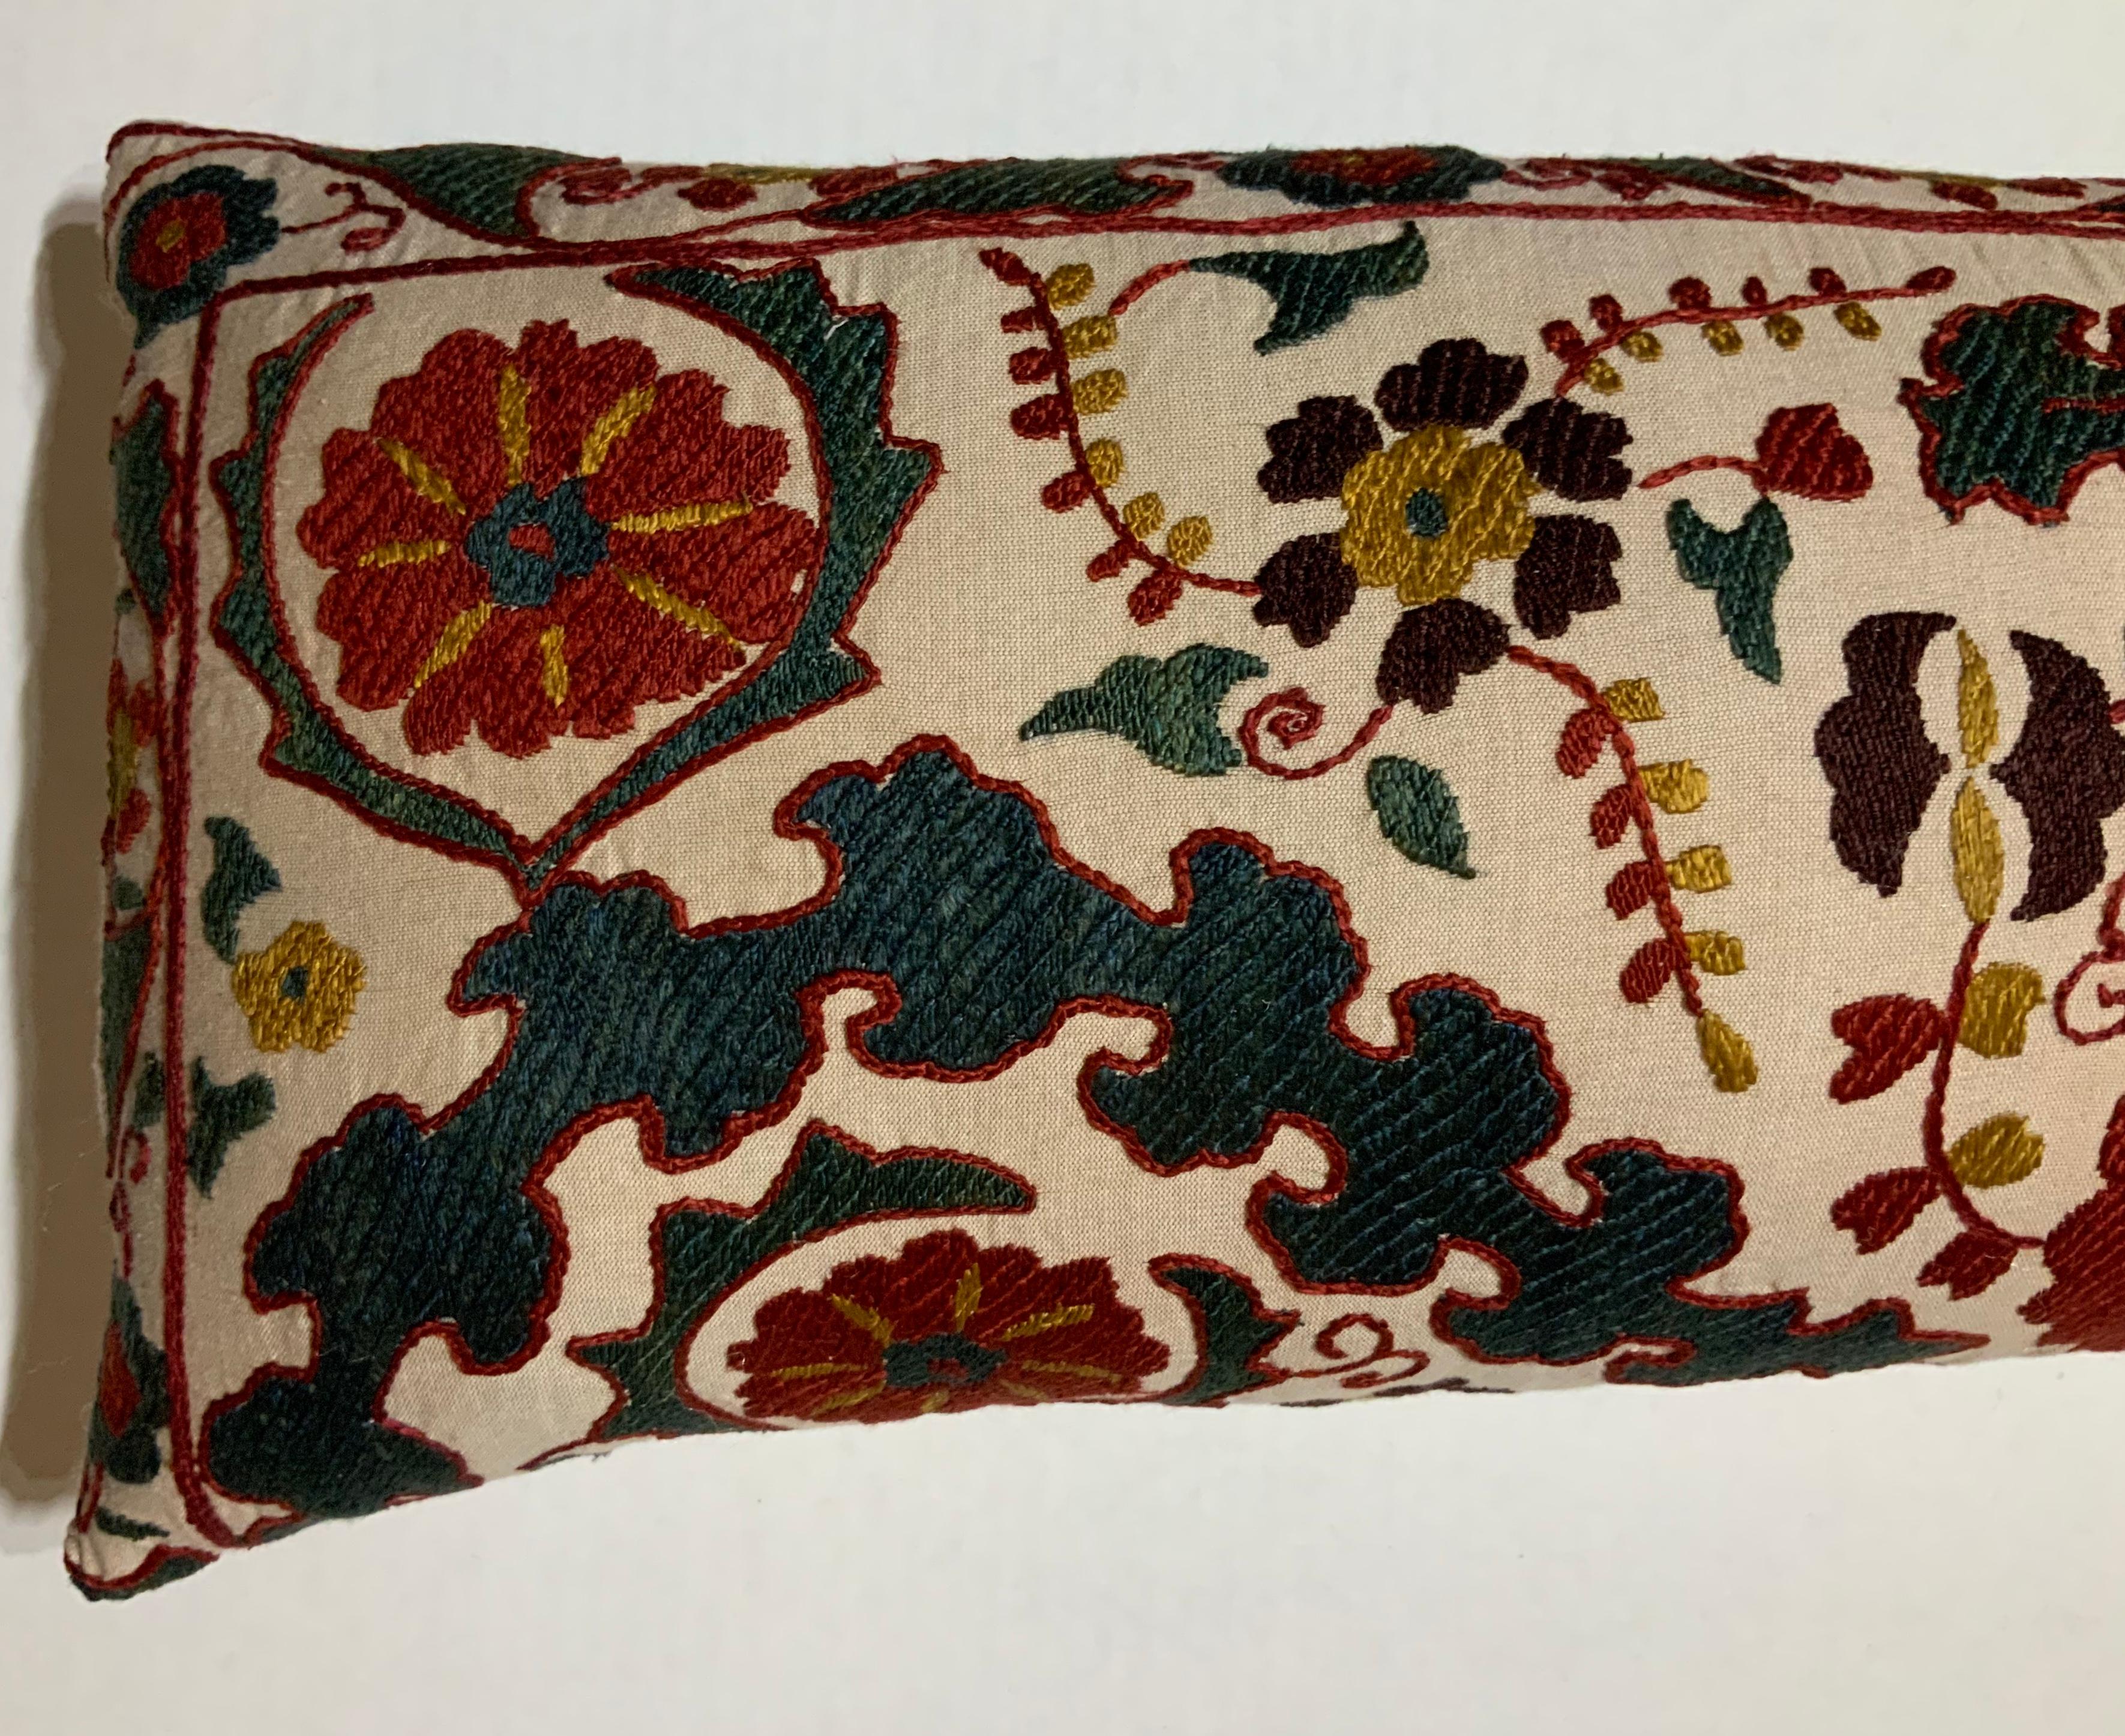 Pair of Vintage Suzani Pillows 1